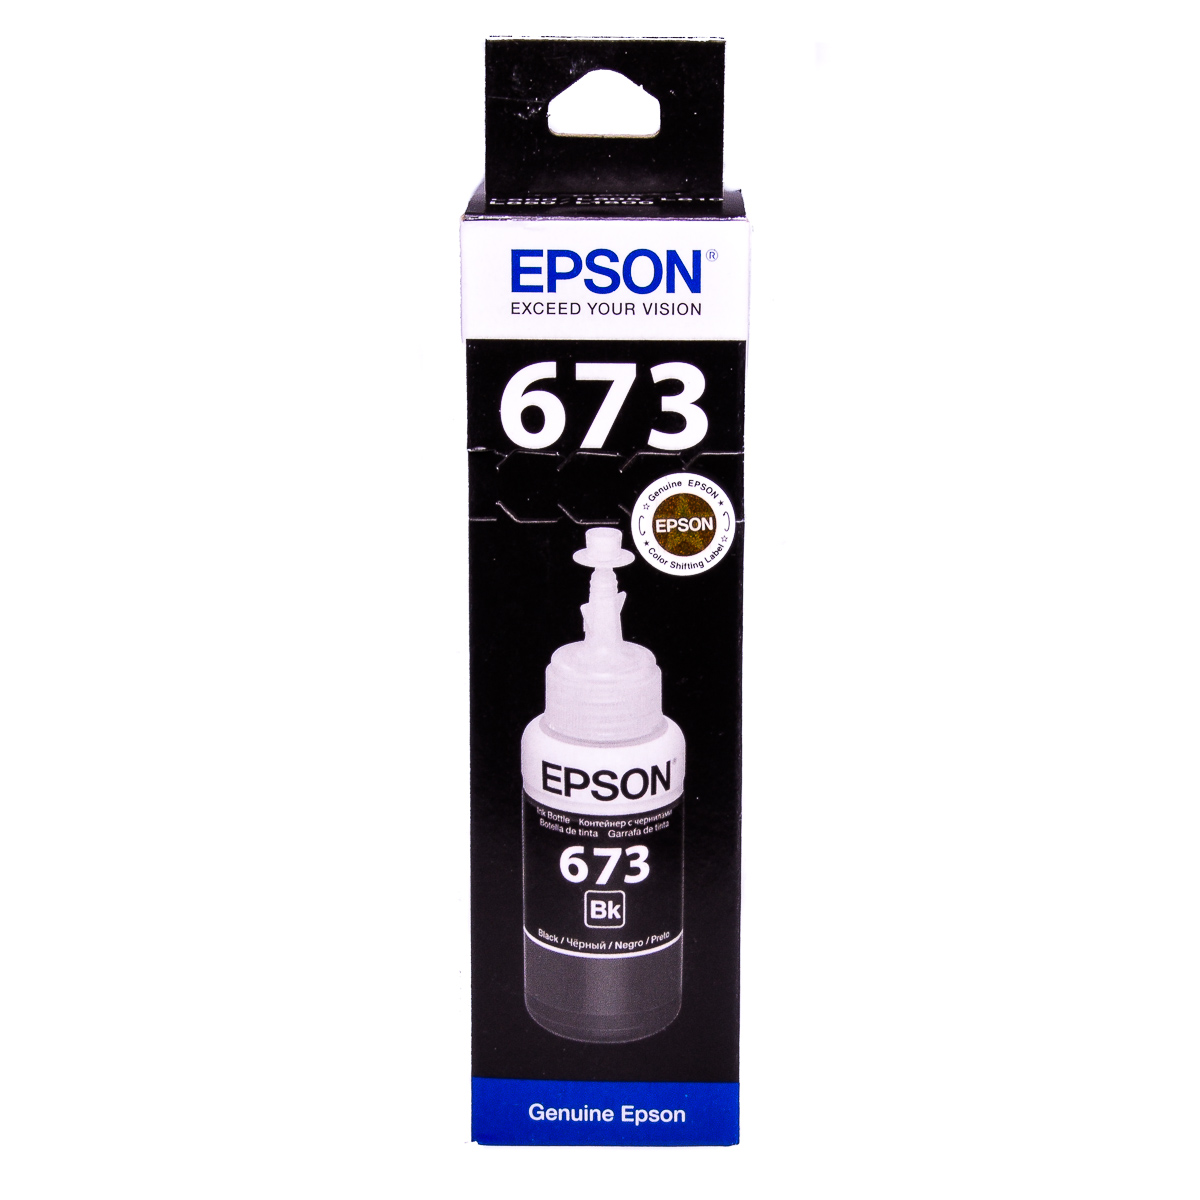 Epson T0801 Black original dye ink refill Replaces Stylus RX685